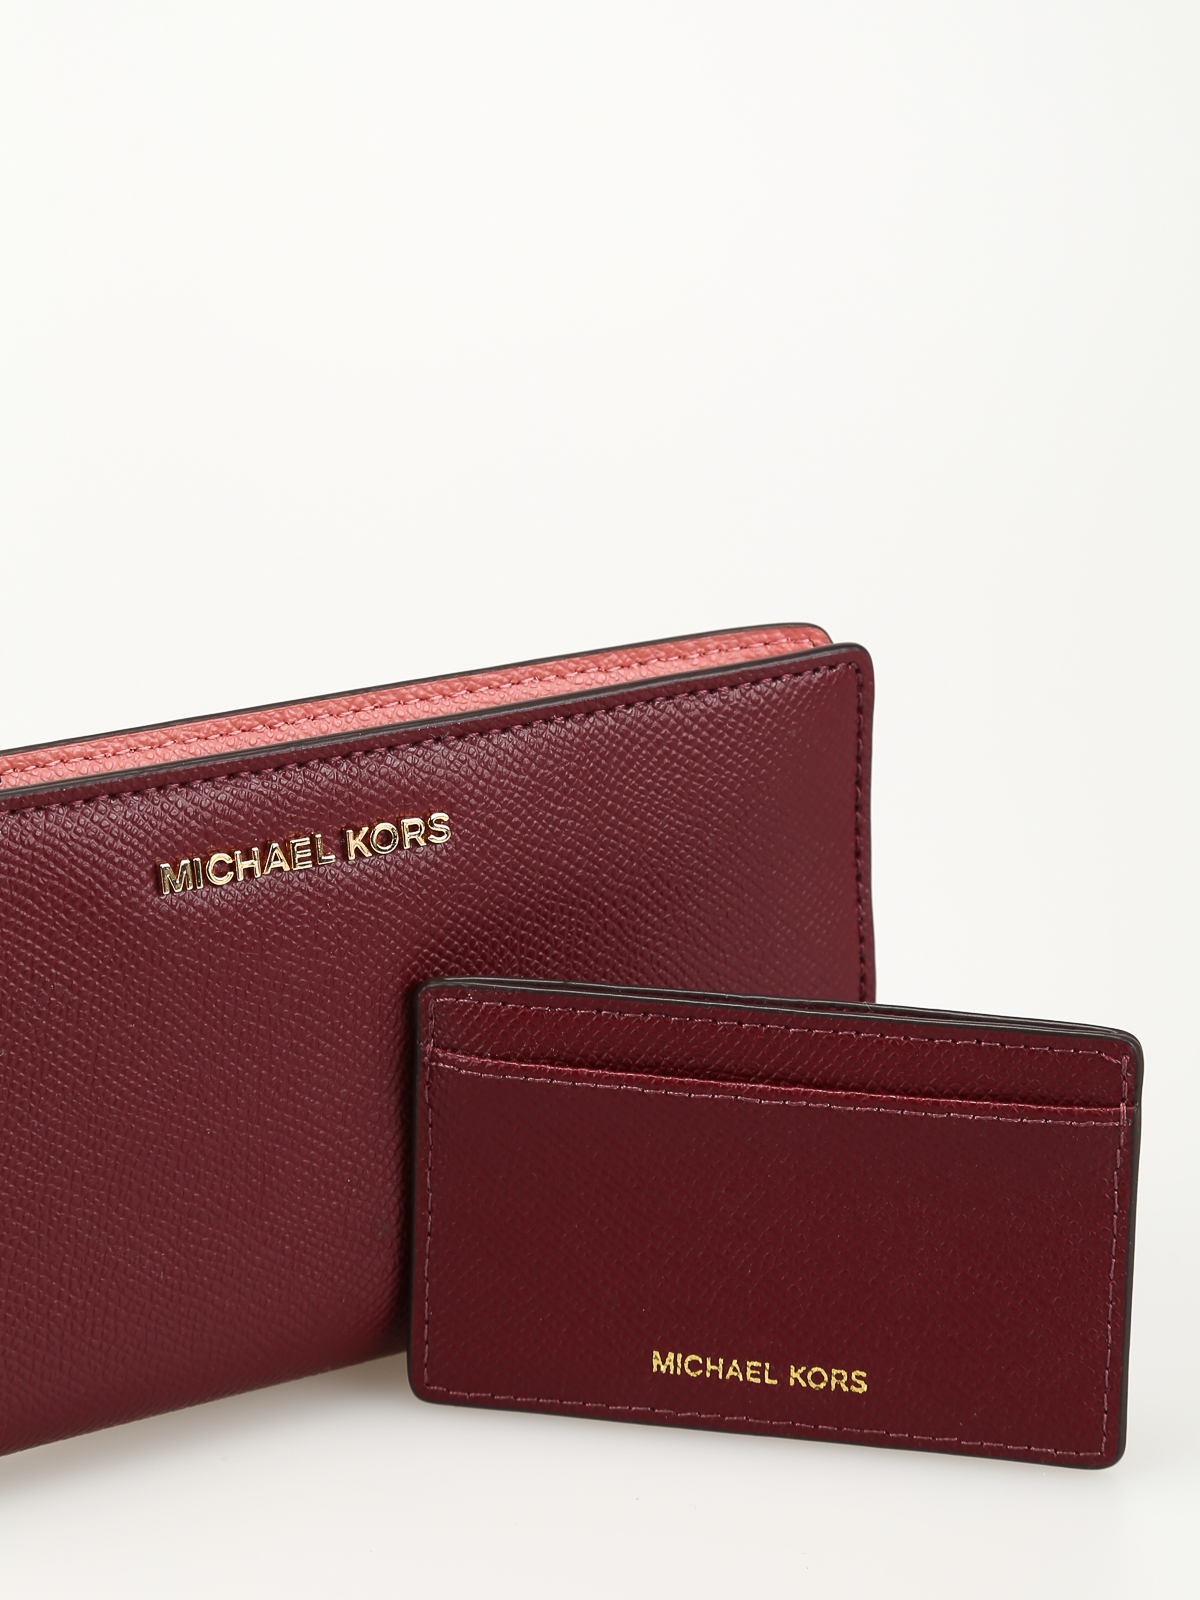 Wallets & purses Michael Kors - Money Pieces wallet with card holder -  32T8GF6D3T891